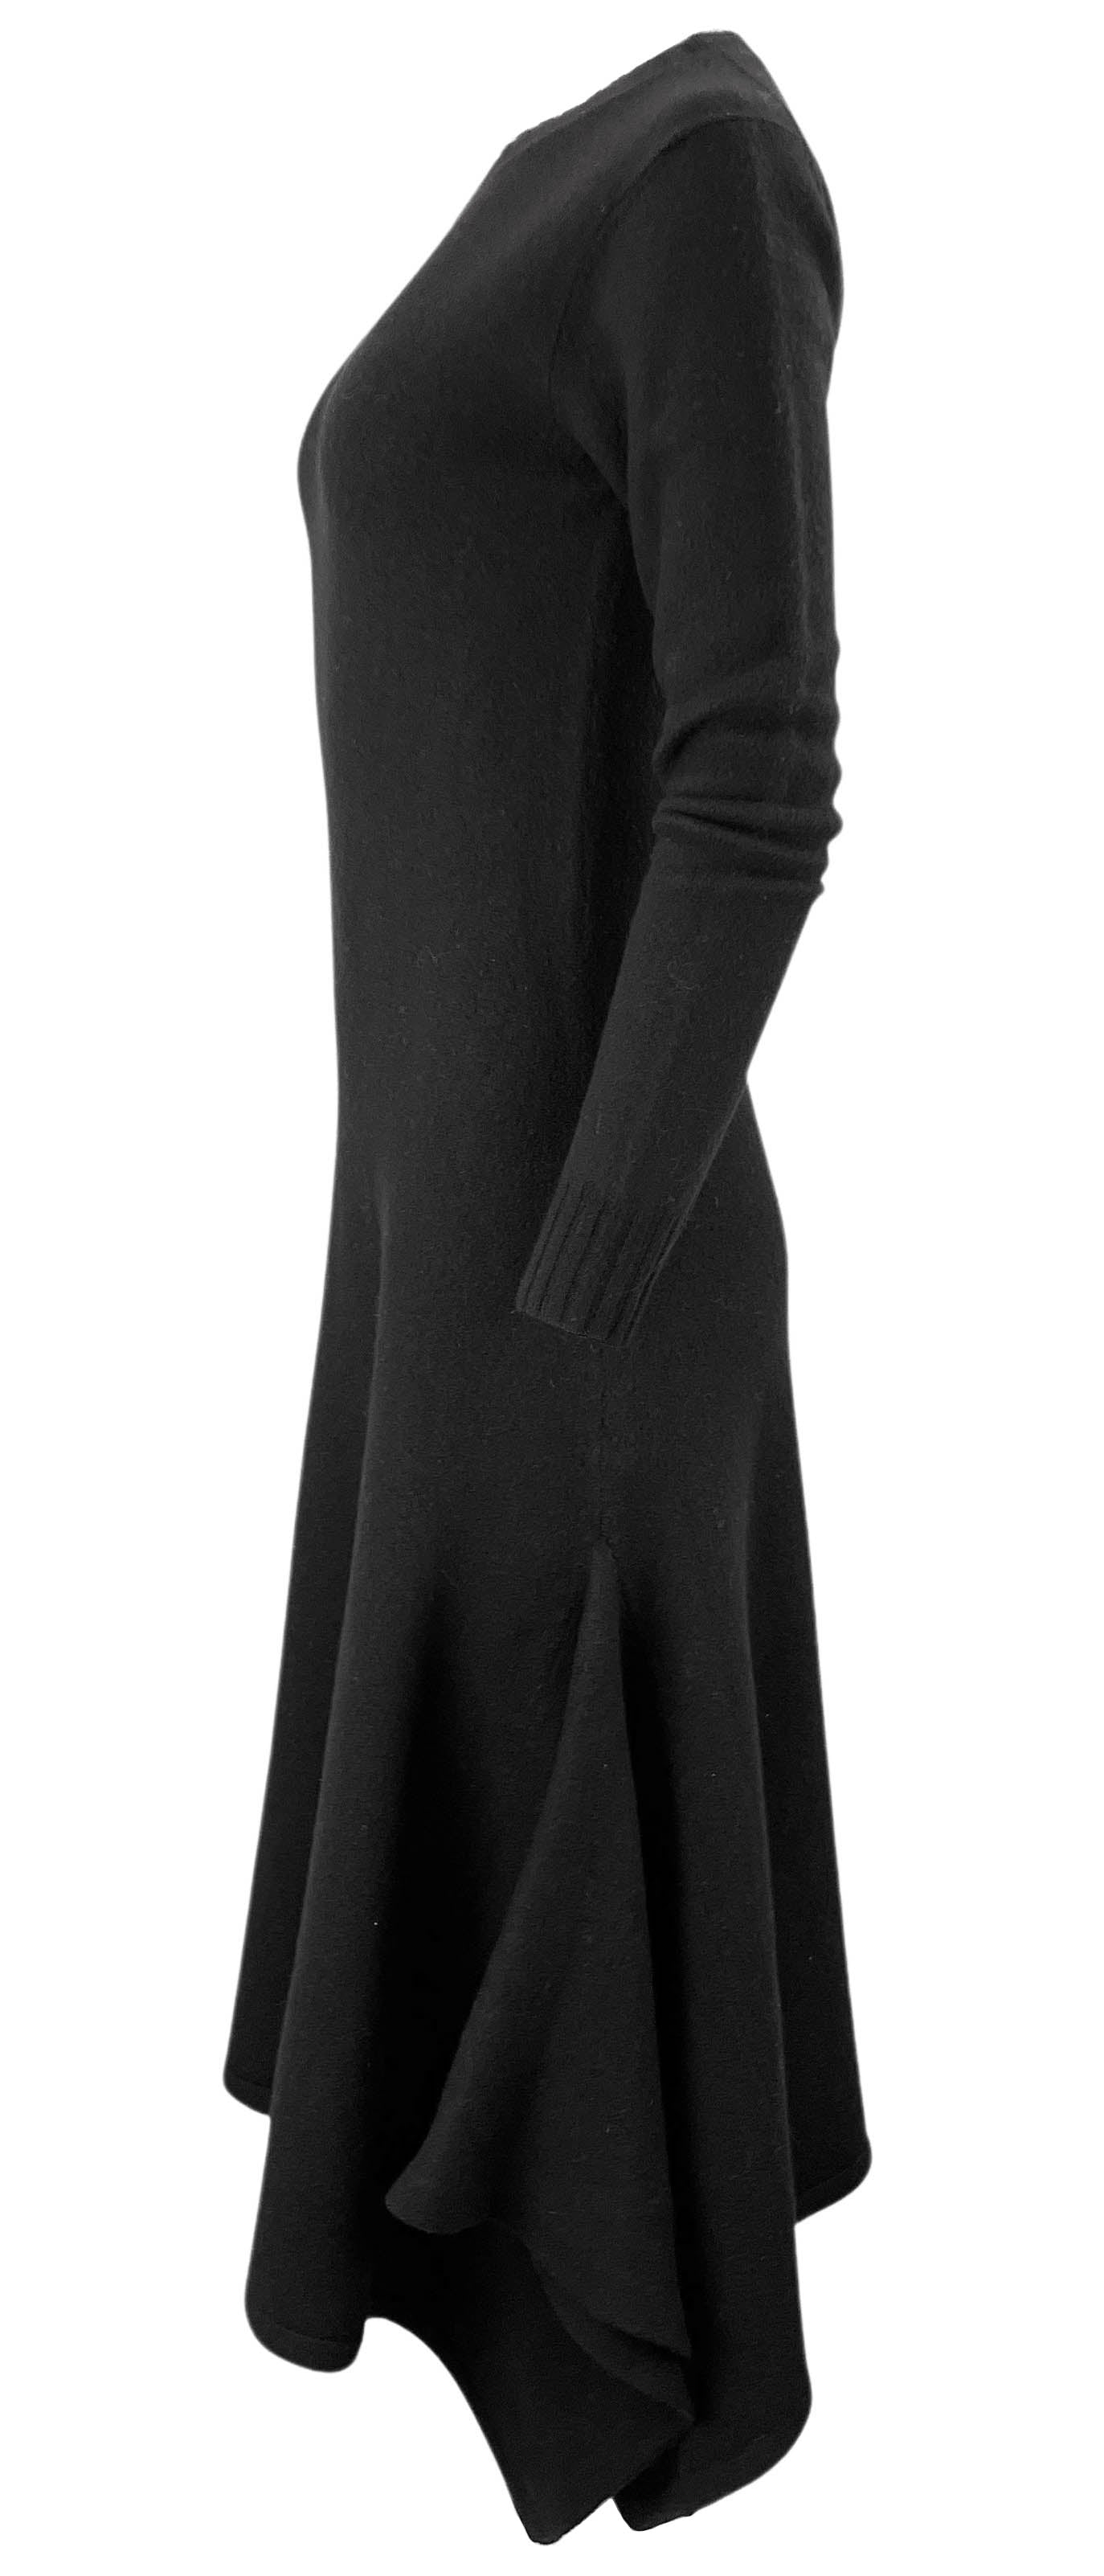 Jil Sander Knit Dress in Black - Discounts on Jil Sander at UAL